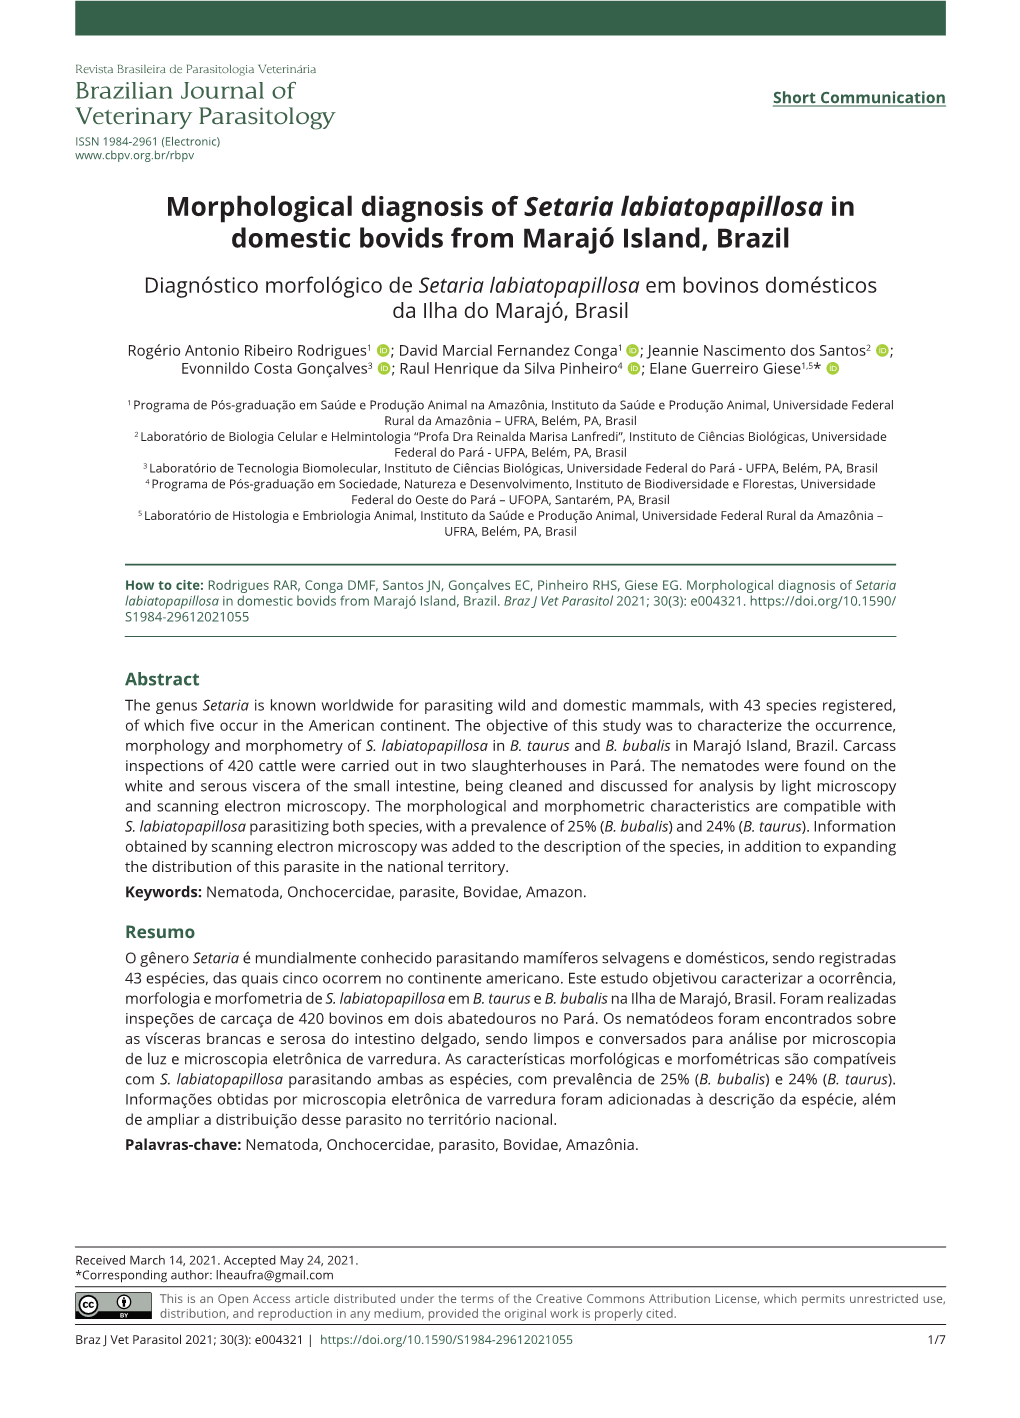 Morphological Diagnosis of Setaria Labiatopapillosa in Domestic Bovids from Marajó Island, Brazil